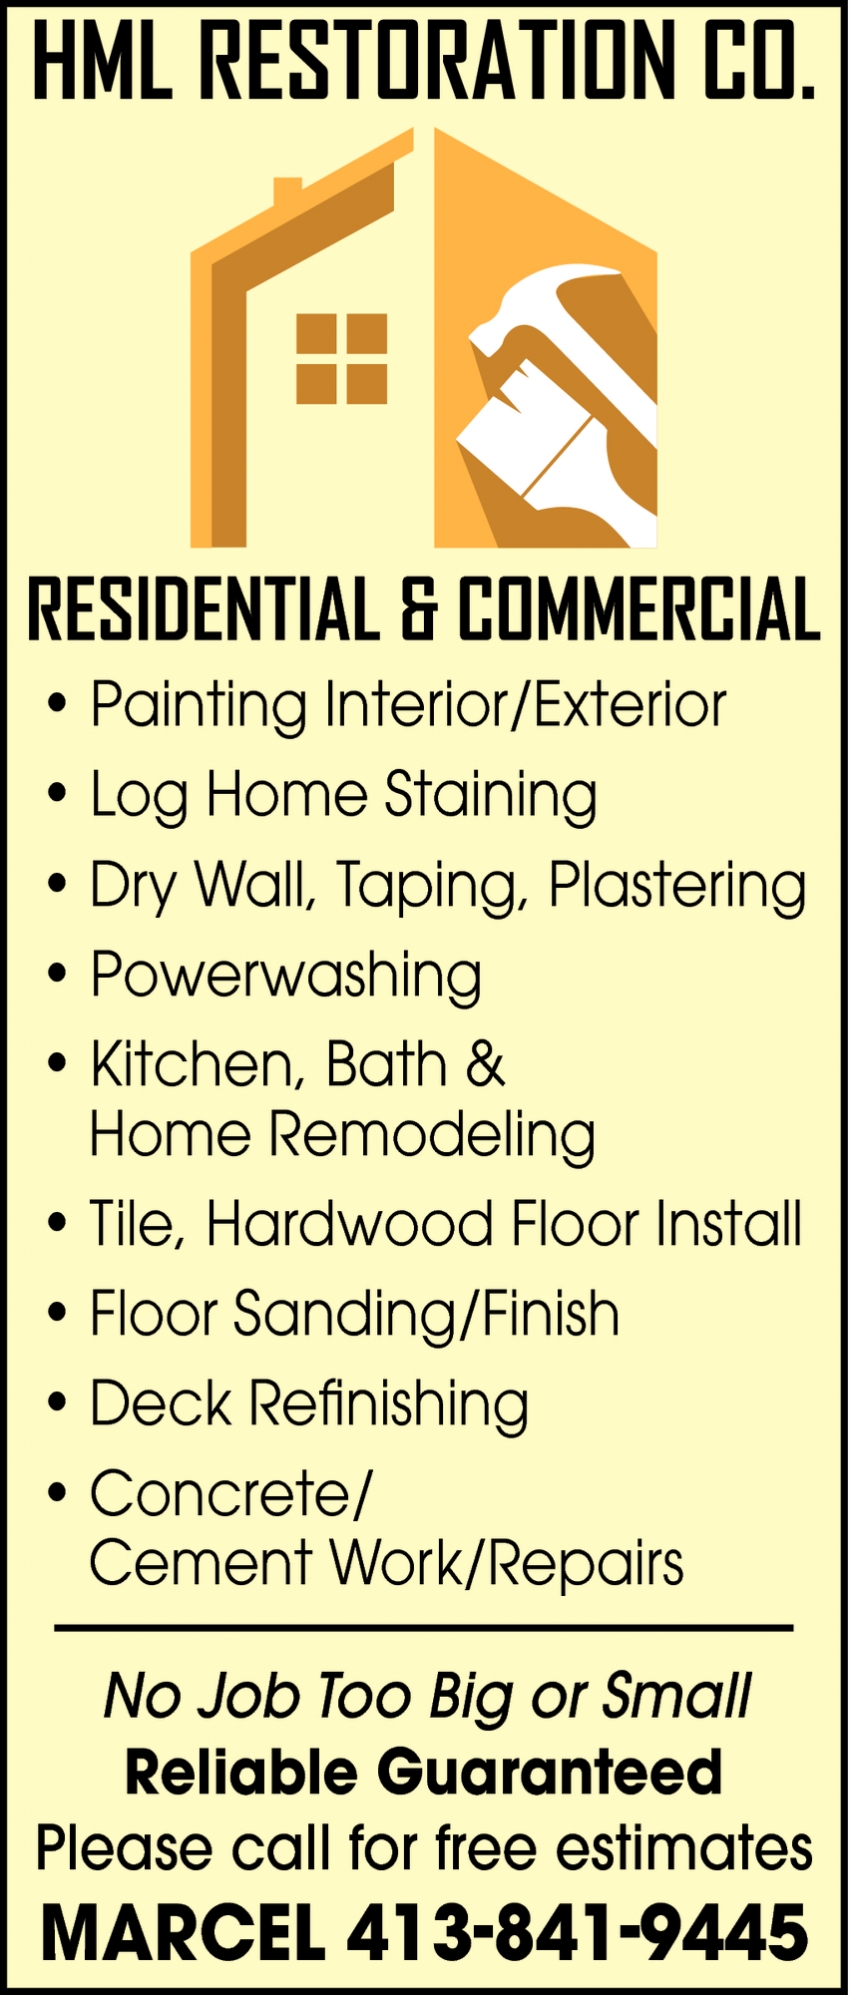 Residential & Commercial Restoration